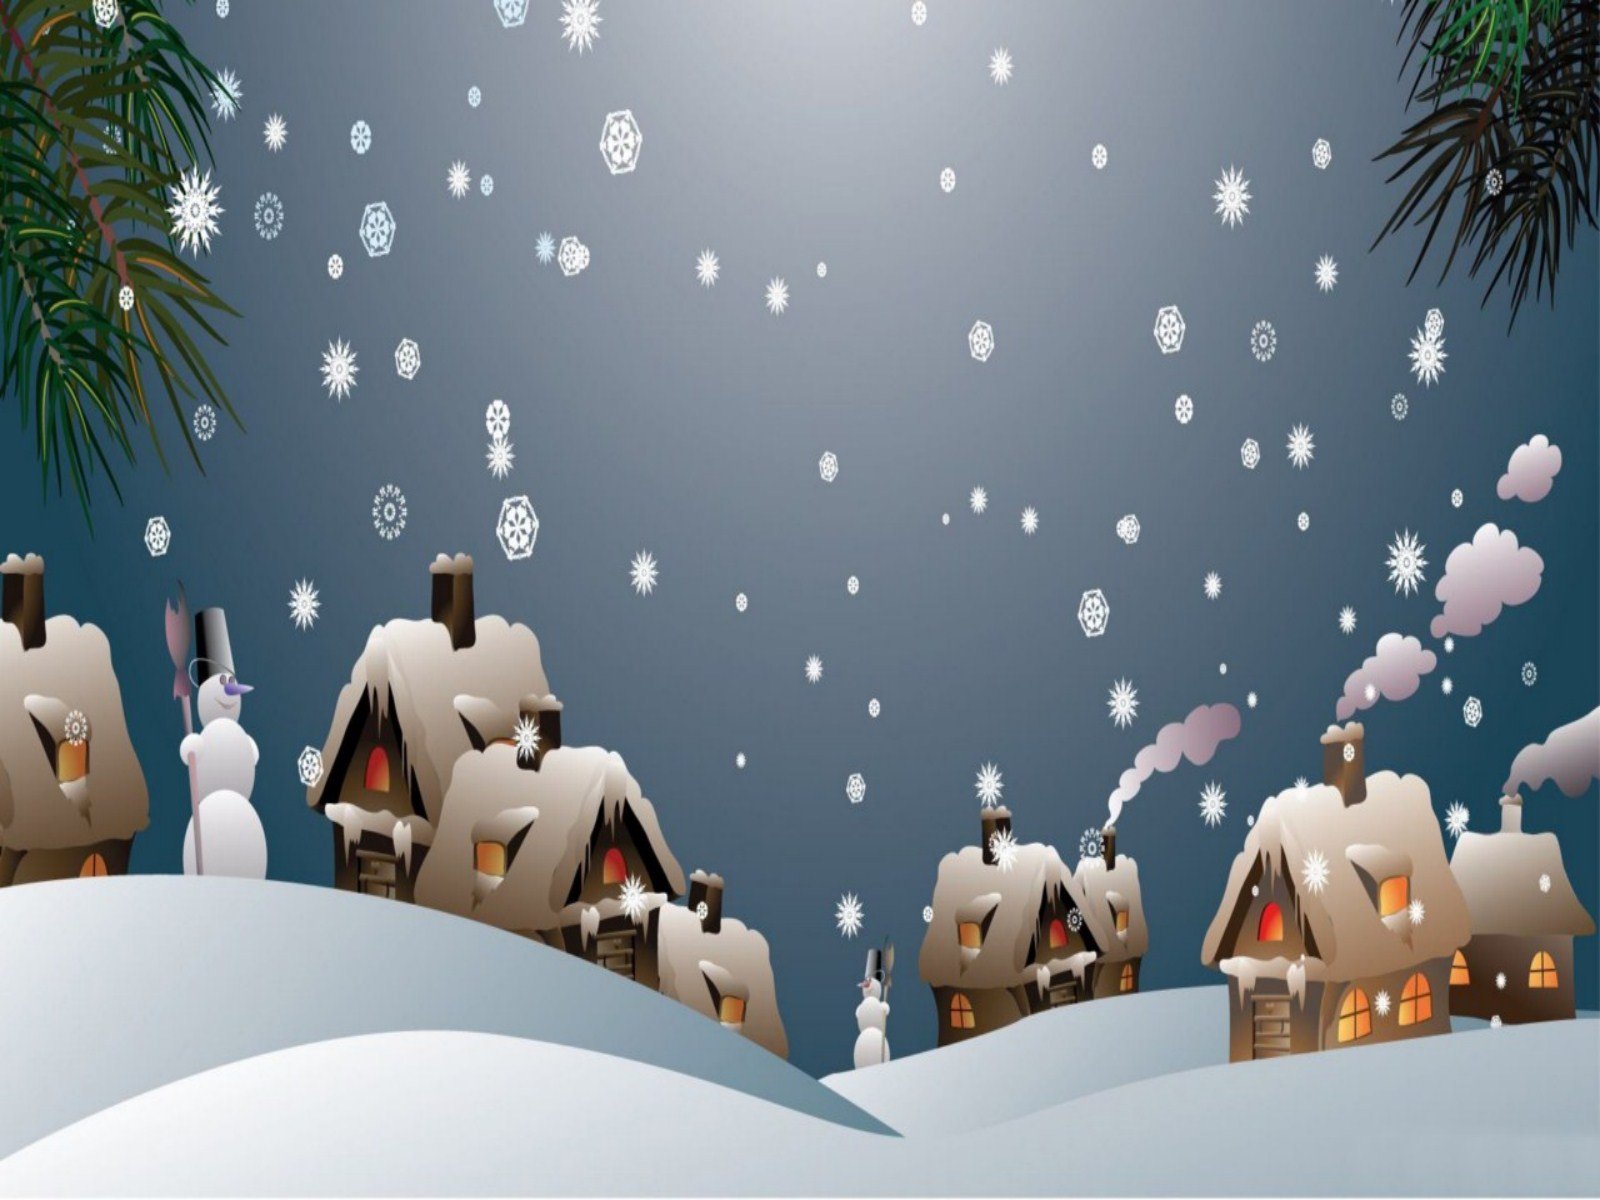 Free Animated Snowy Christmas Wallpaper